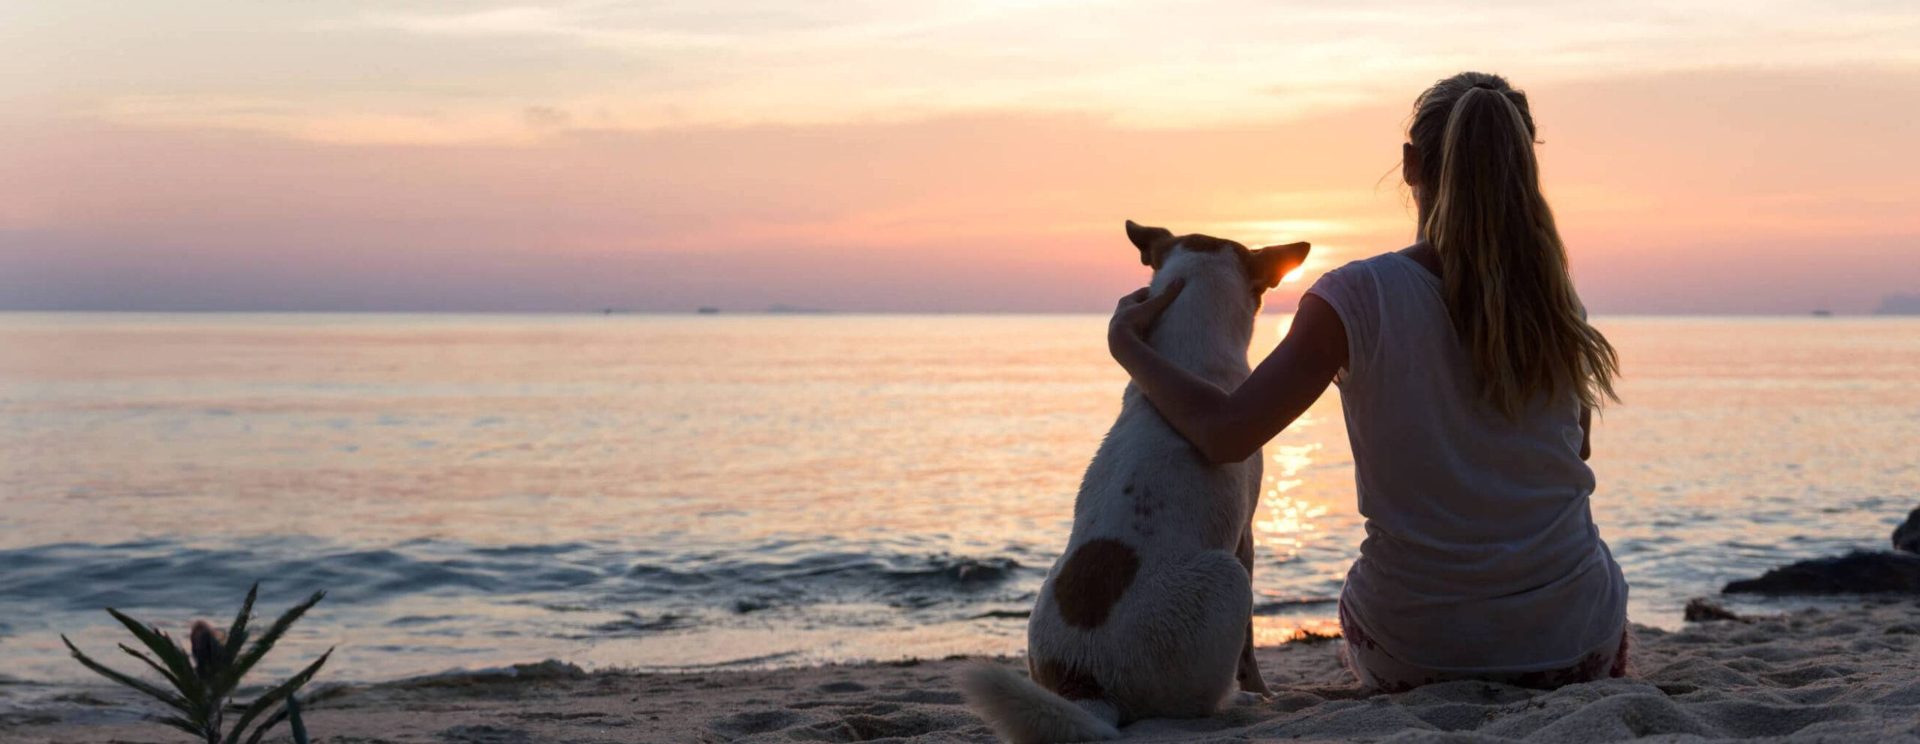 Sunset beach dog and woman